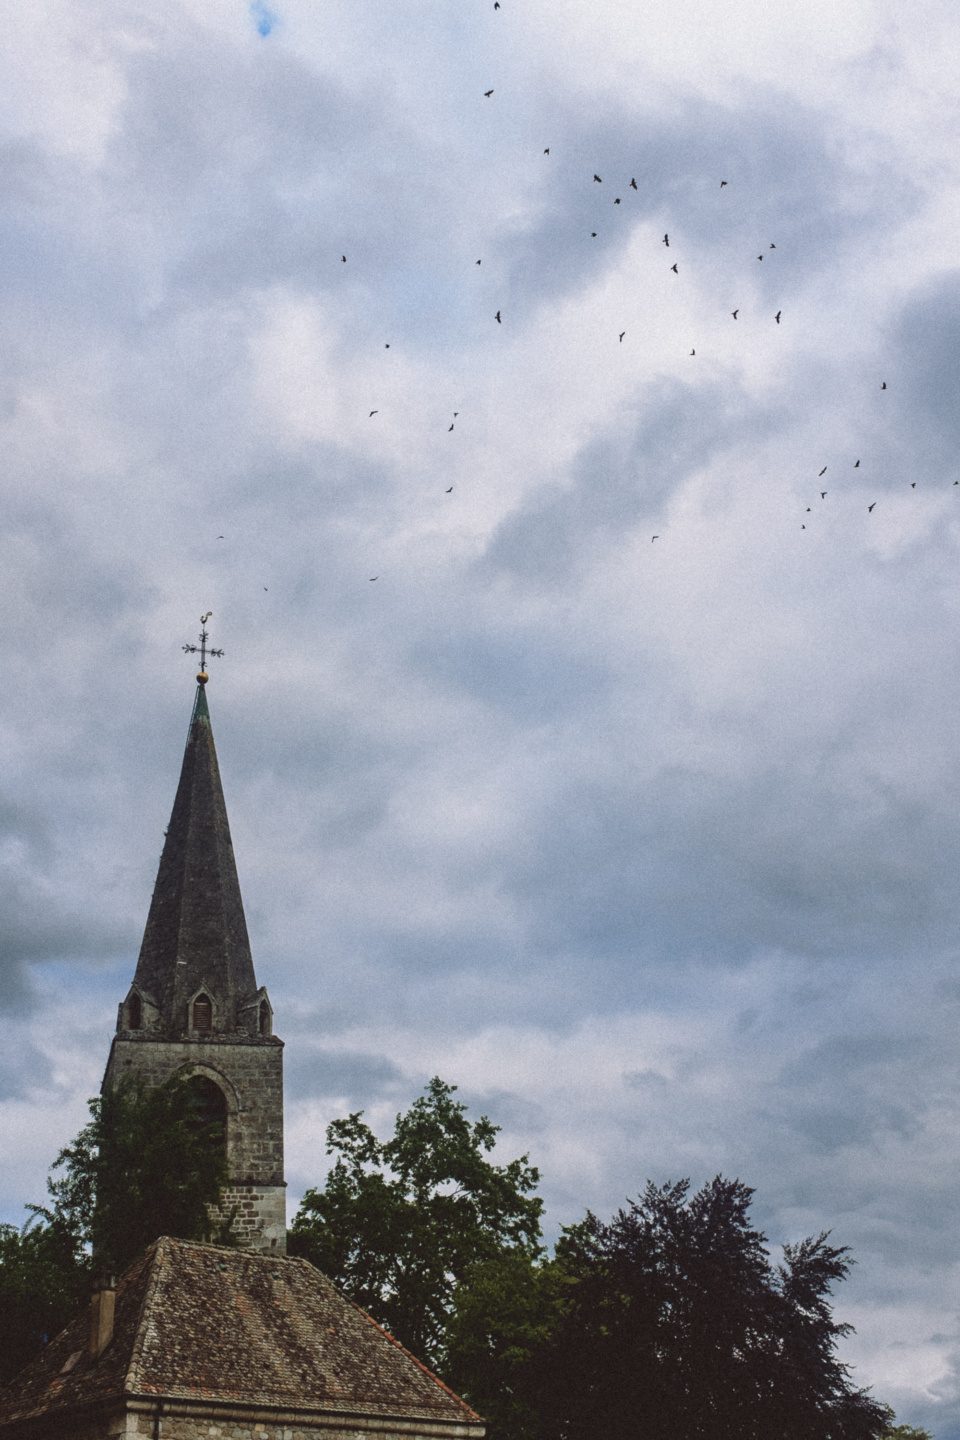 Birds flying over the church